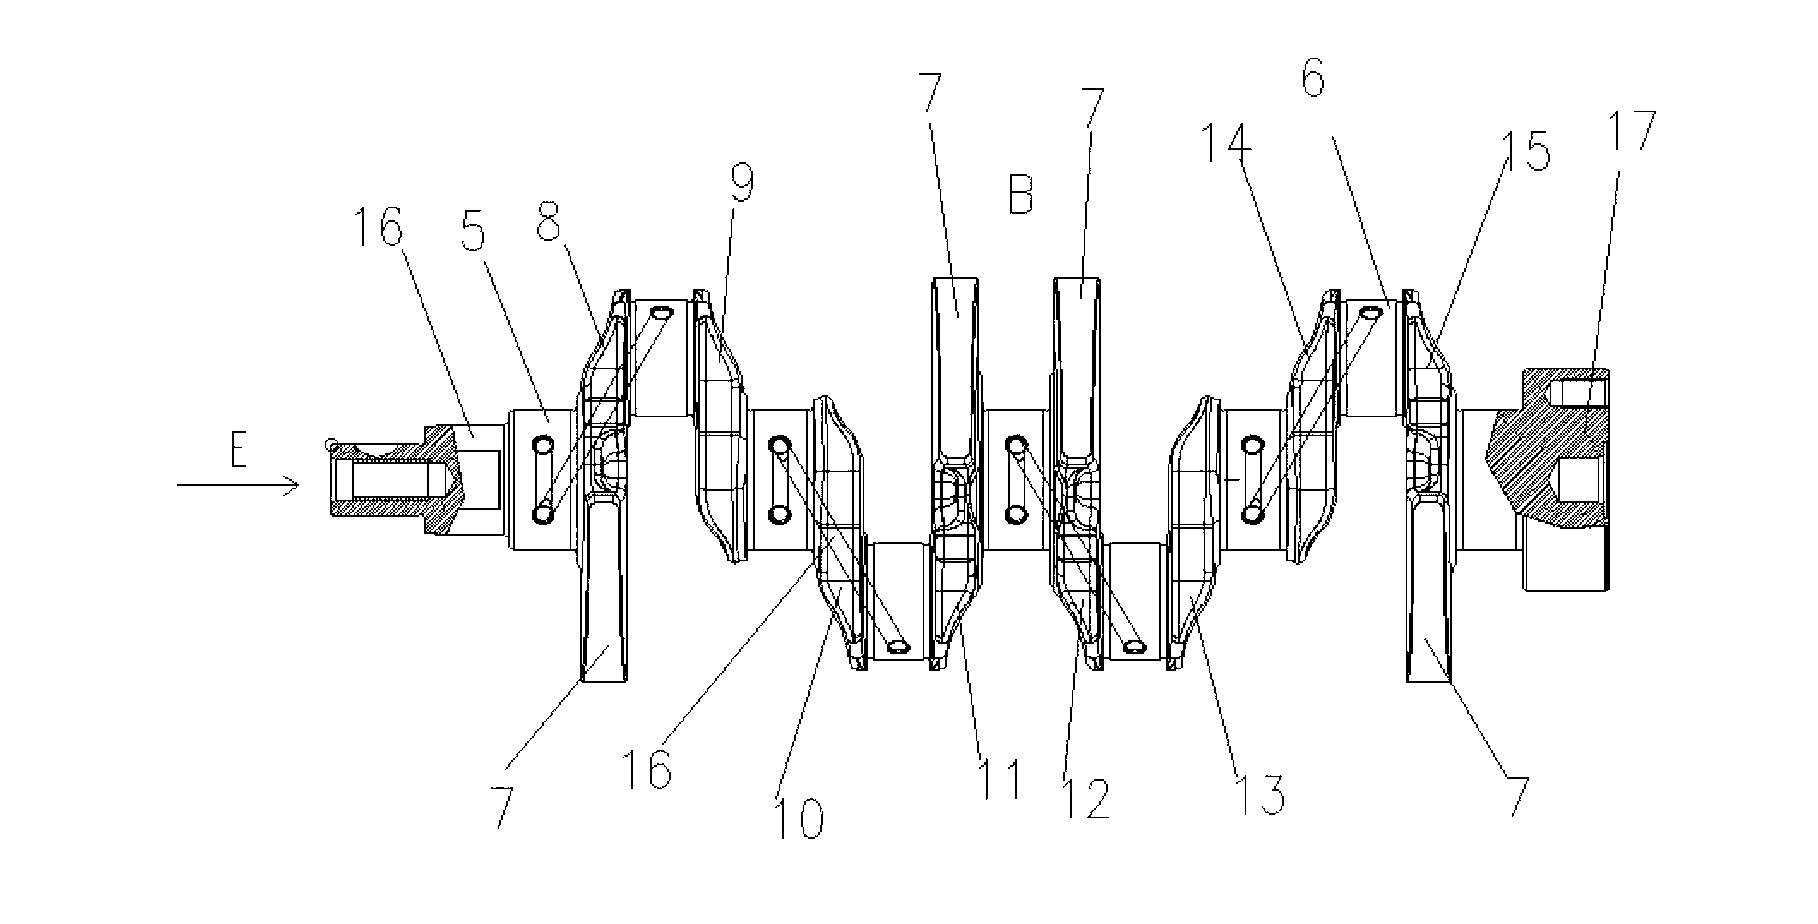 Piston type engine offset crankshaft connecting rod mechanism